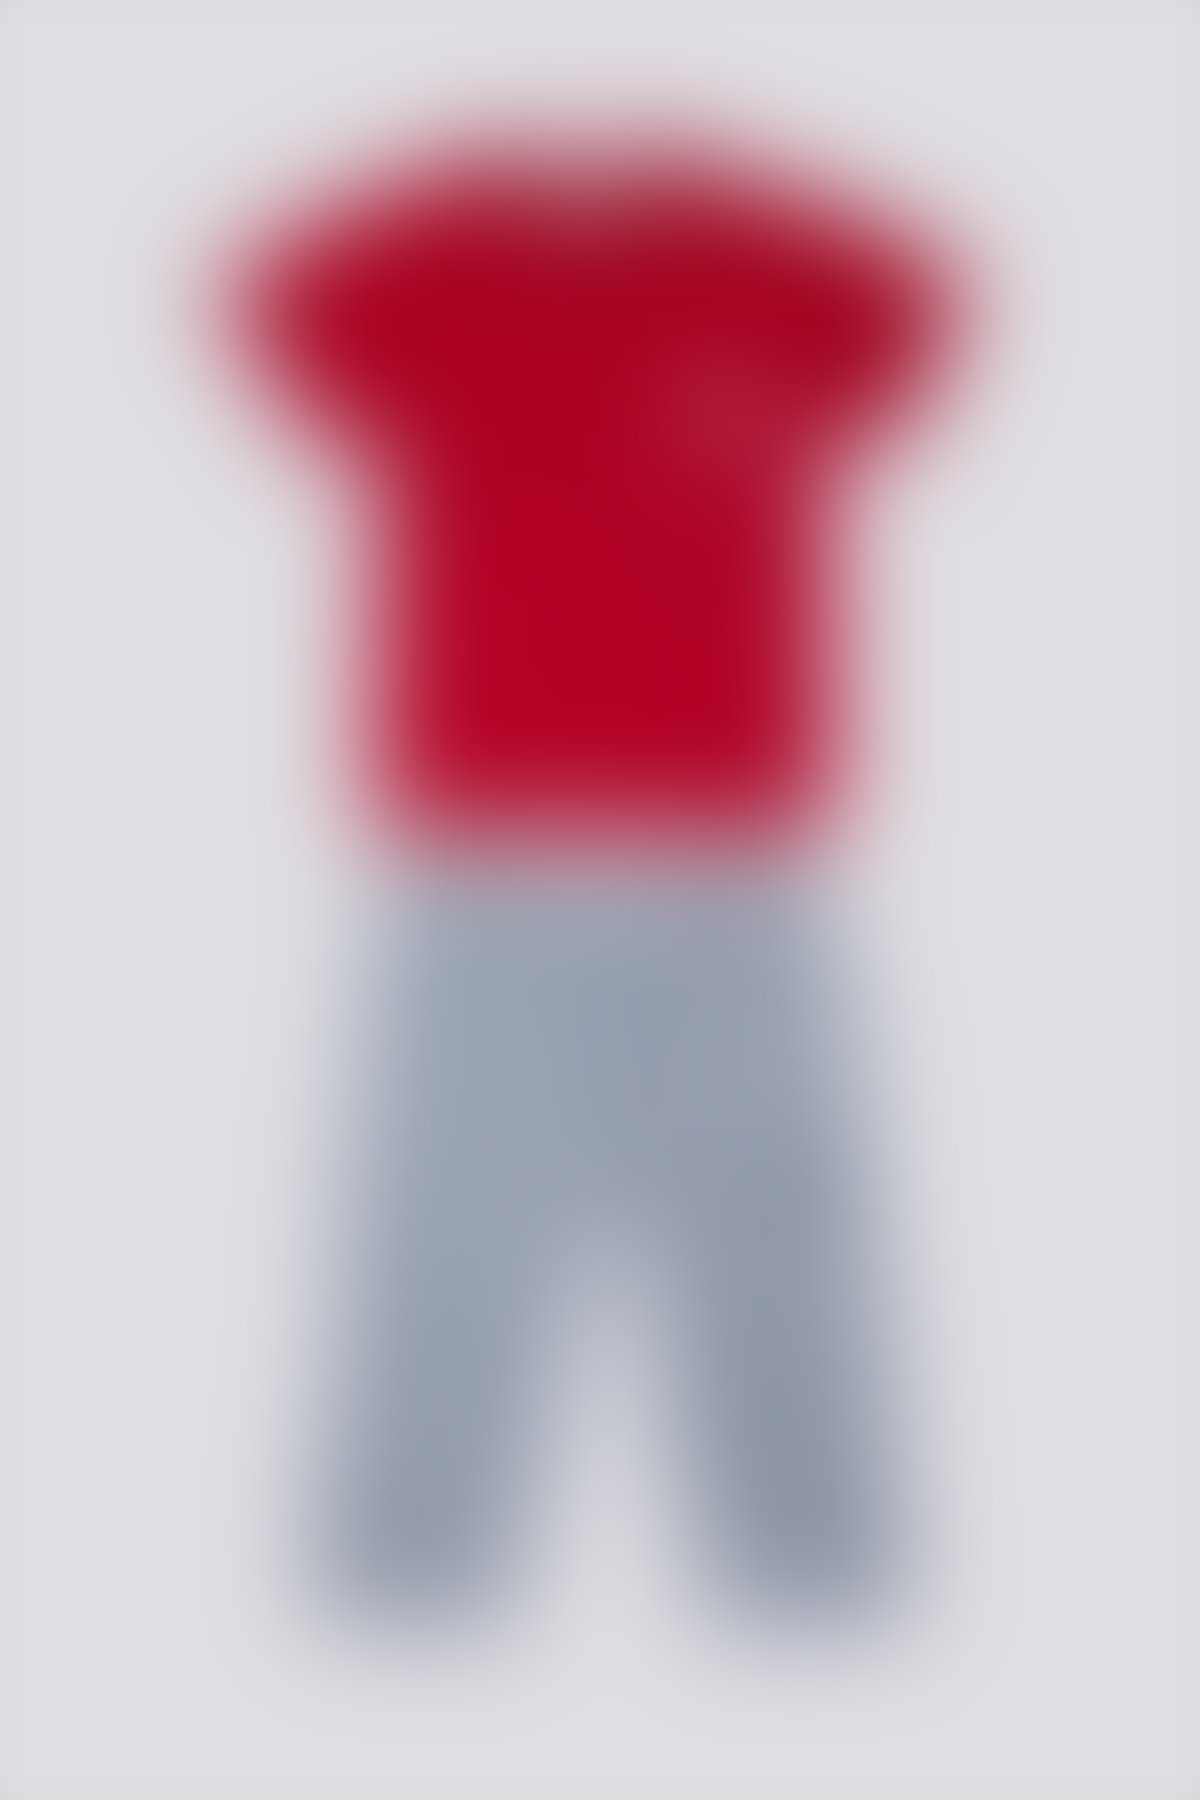 U.S. Polo Assn - U.S. Polo Assn Delicate Light Texture Kırmızı Bebek Tshirt Takım